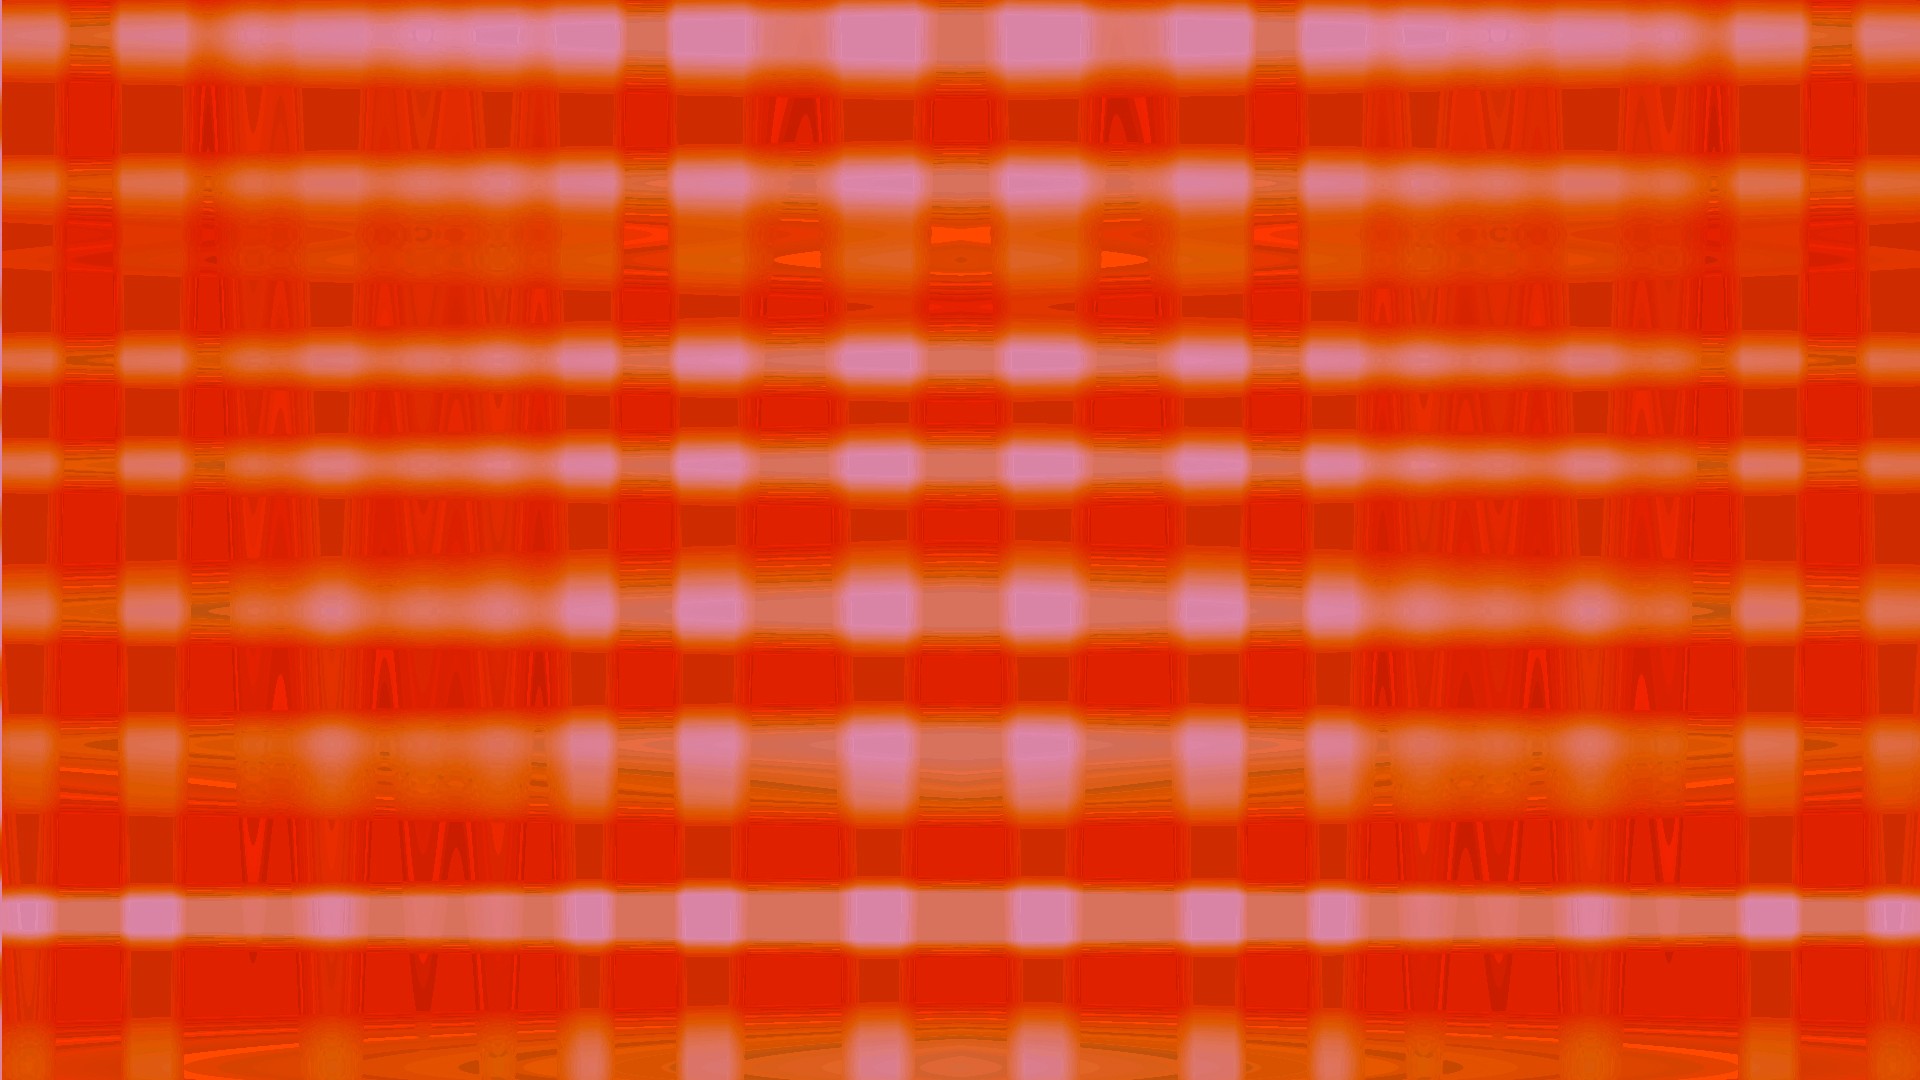 mirror, Orange, Lines, Abstract, Shapes, Digital Art Wallpaper